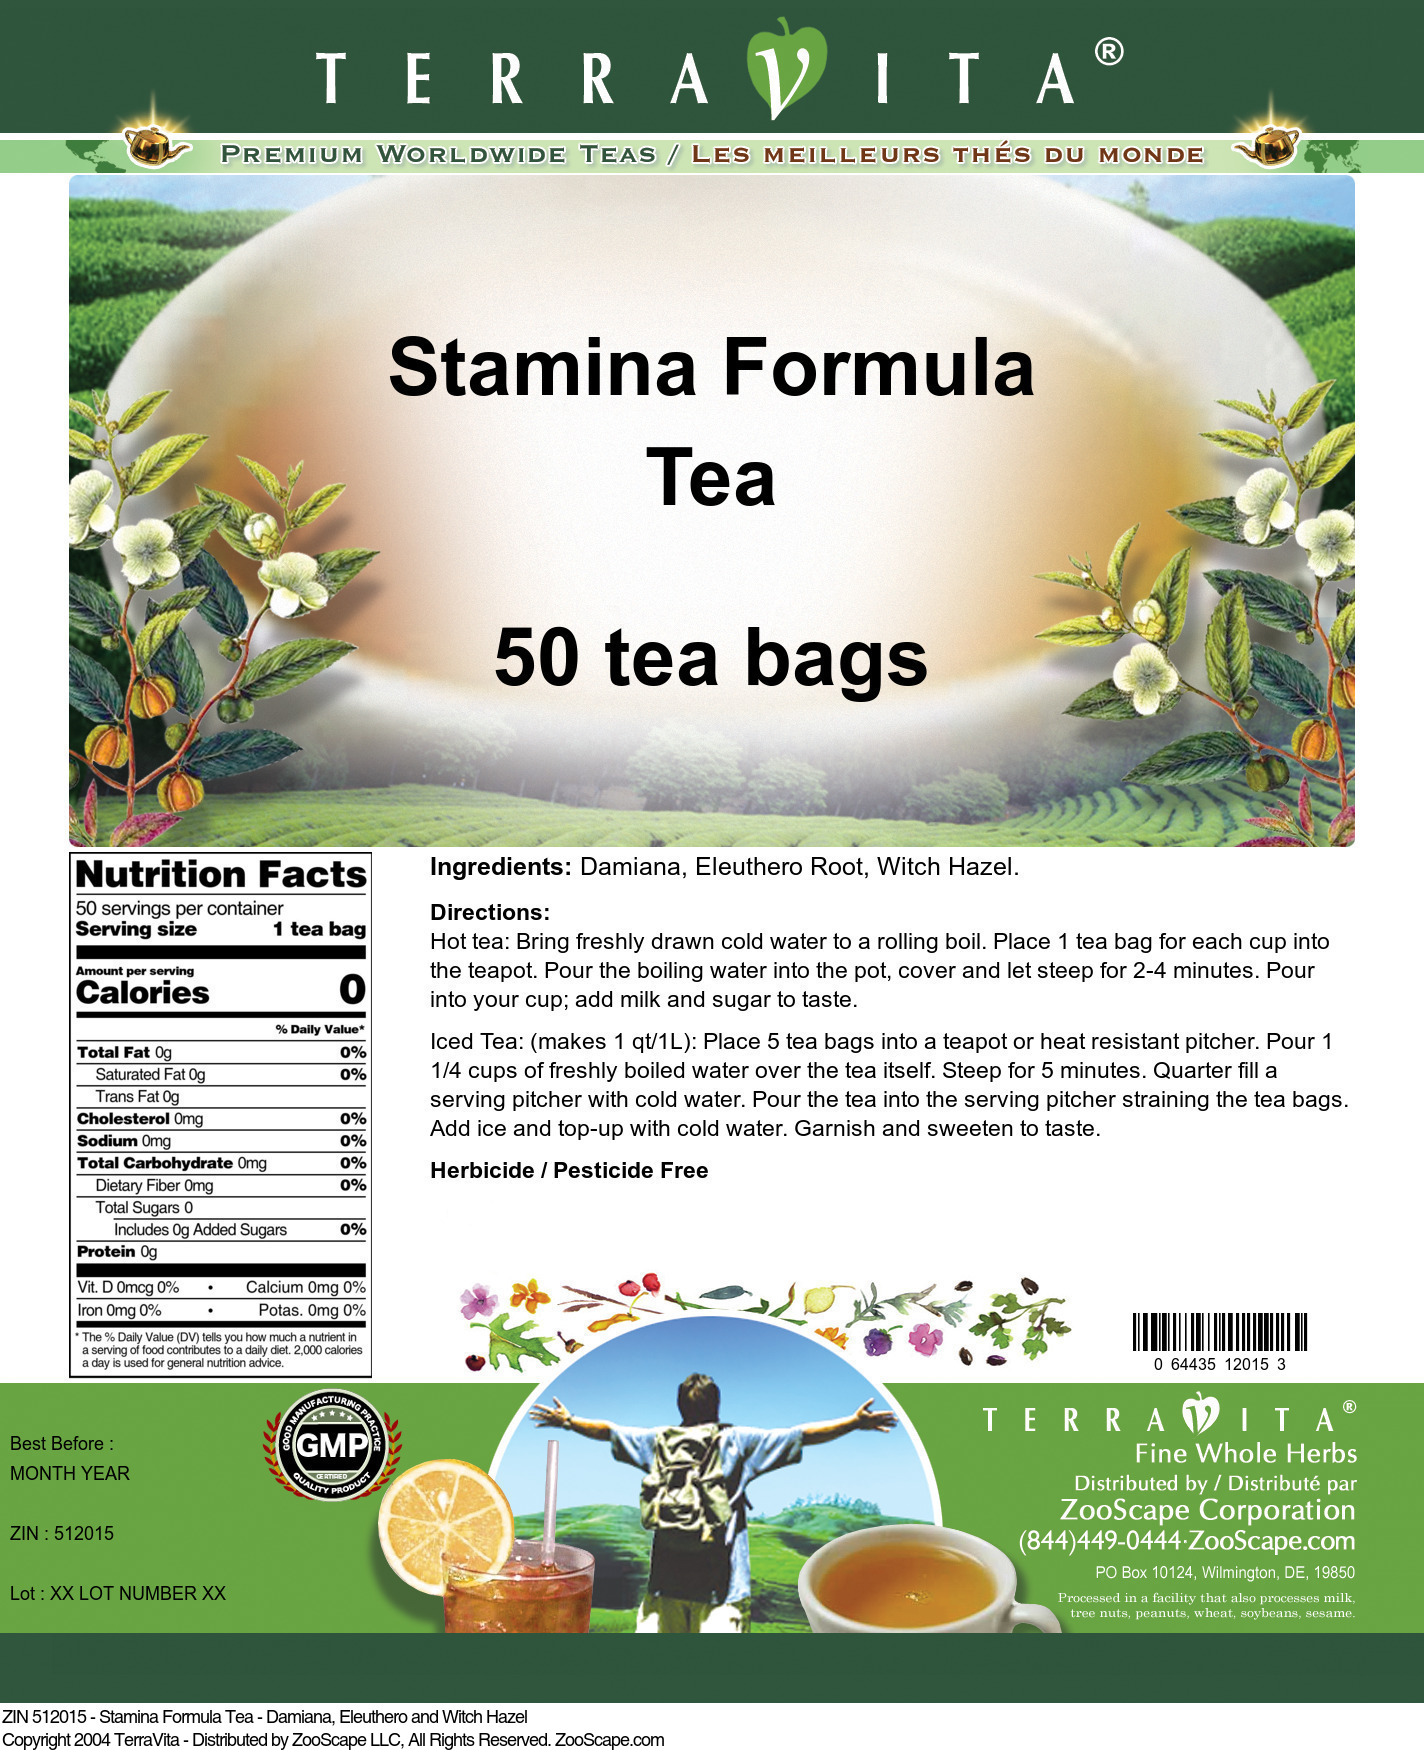 Stamina Formula Tea - Damiana, Eleuthero and Witch Hazel - Label